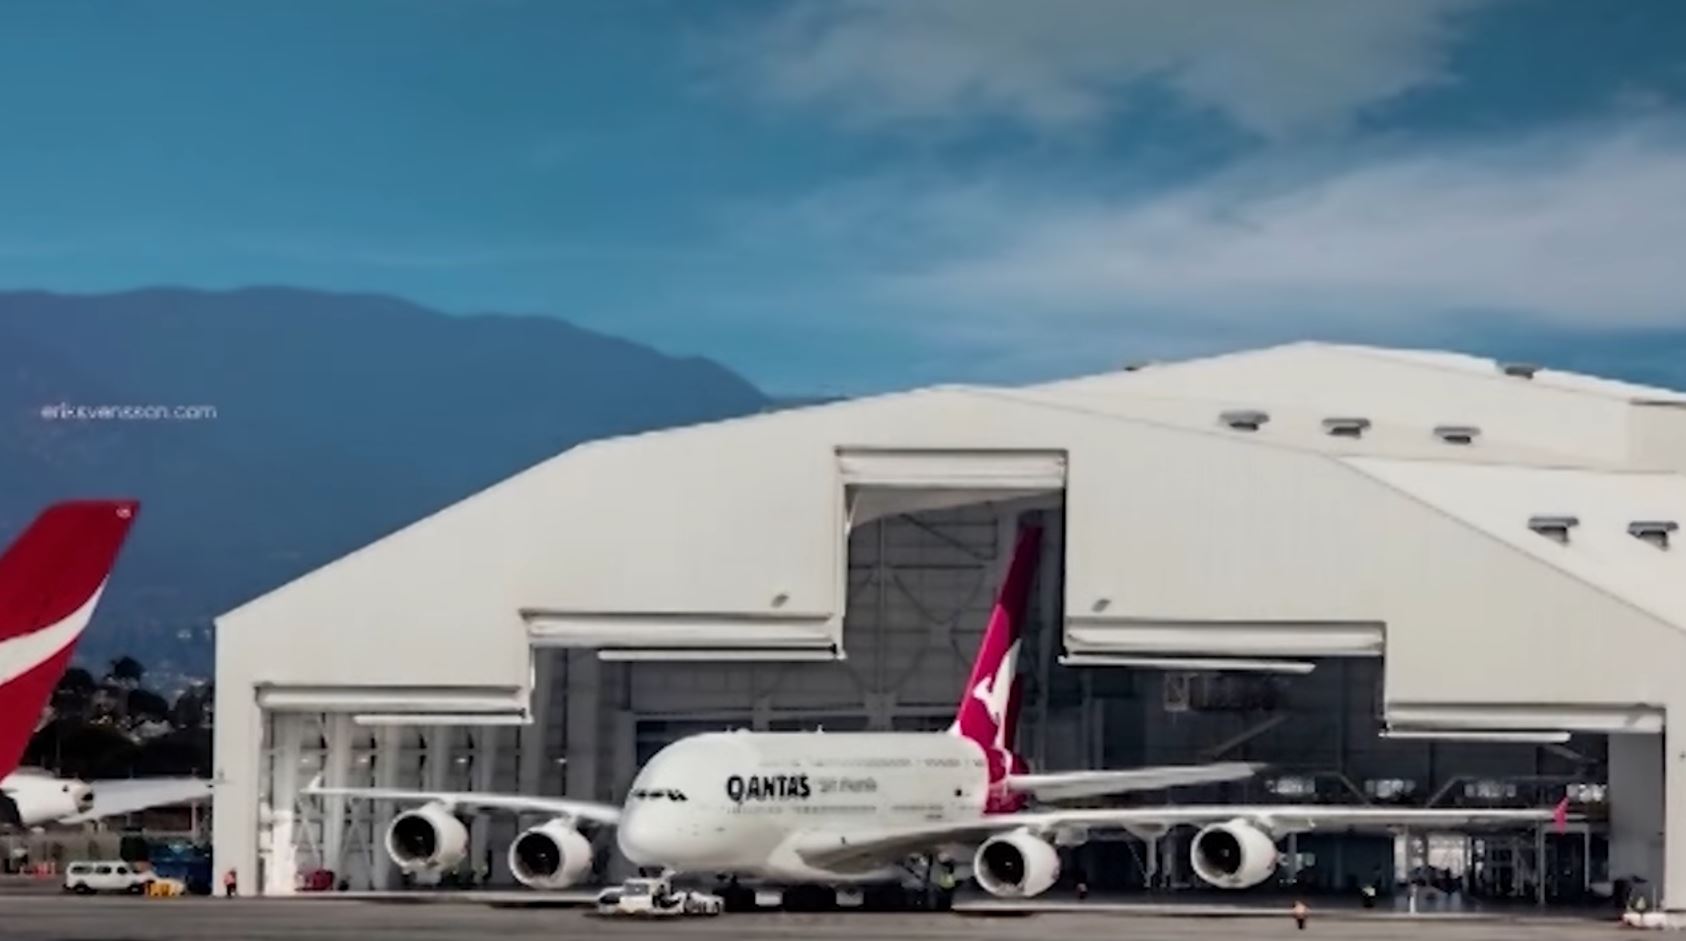 Time-lapse of Qantas’ LAX Hangar getting built